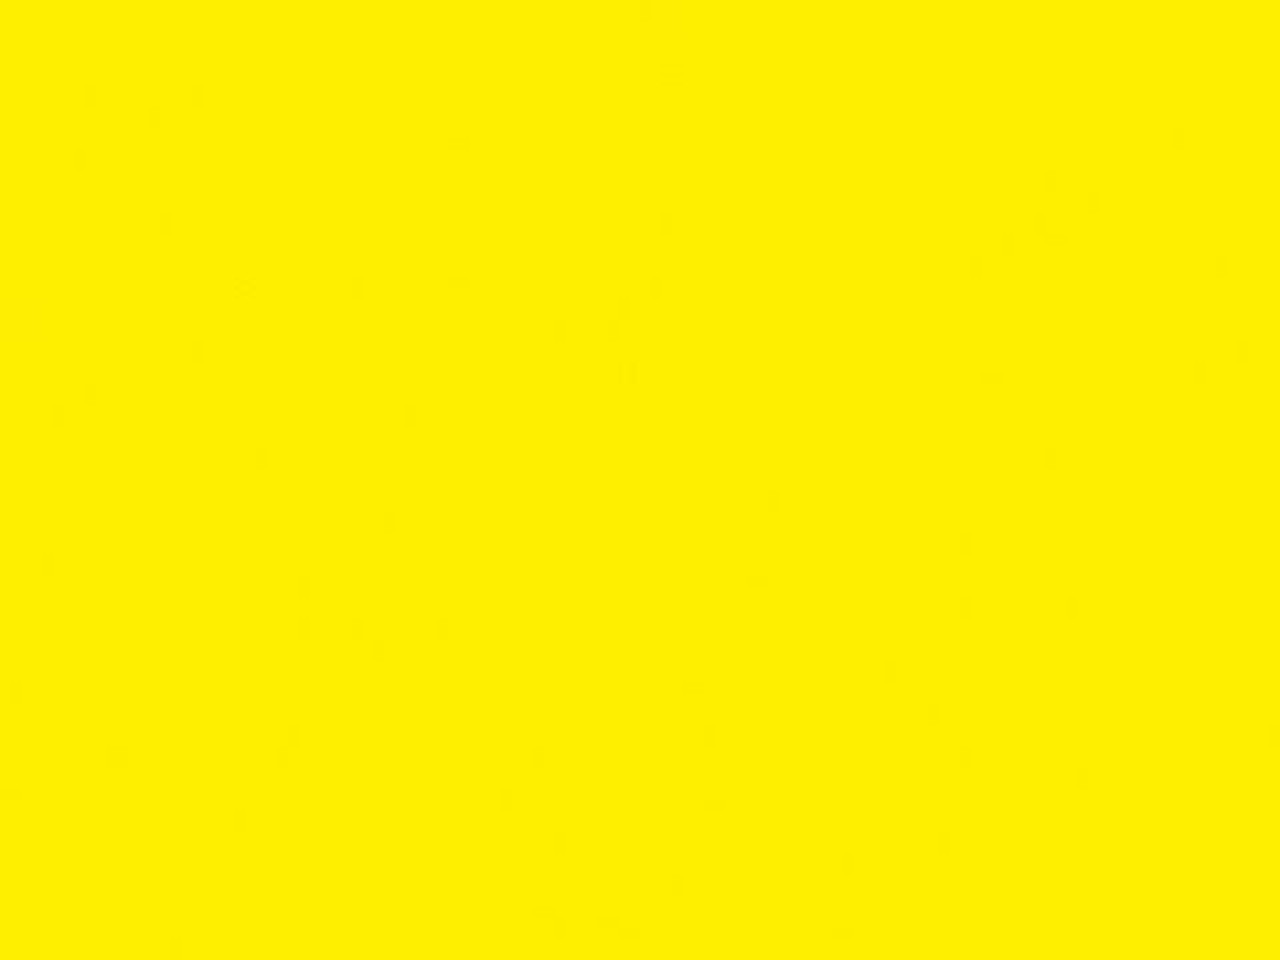 Онлайн конкурс посвященный желтому цвету 